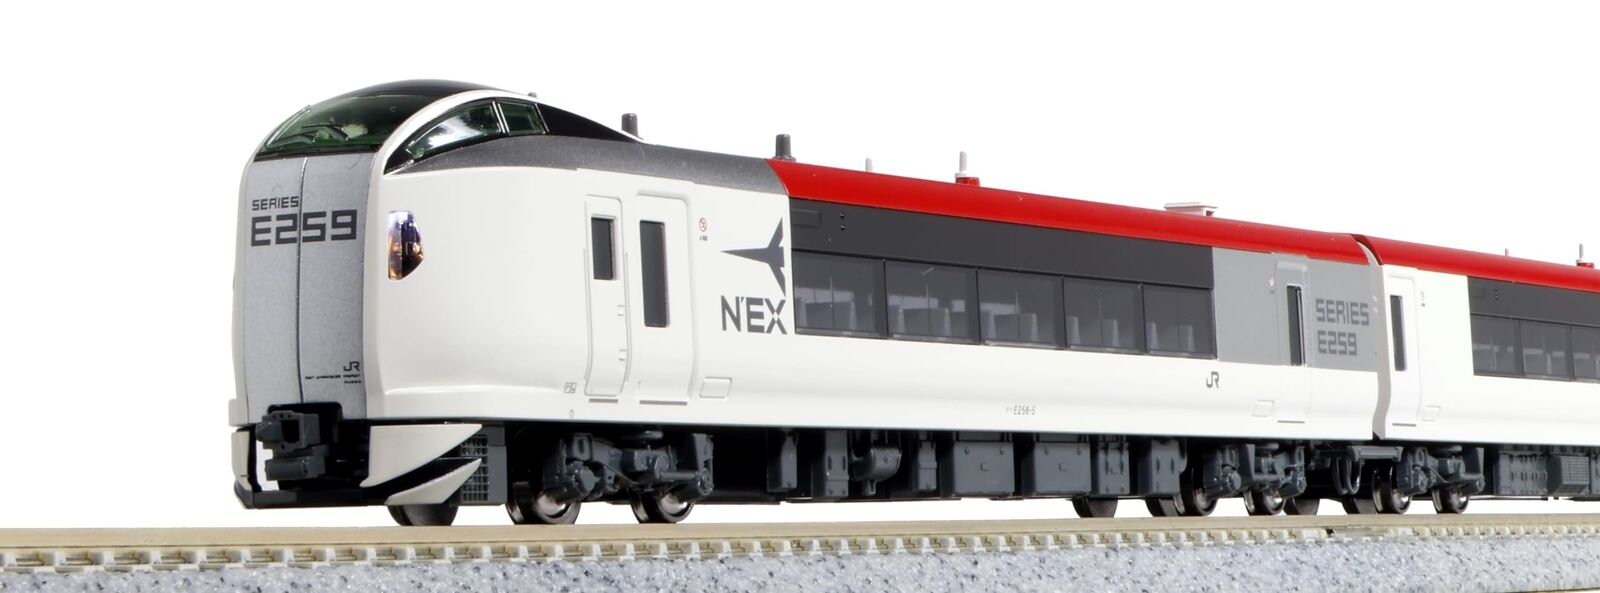 KATO N Gauge E259series Narita Express RenewalColor Basic Set 10-1933 ModelTrain